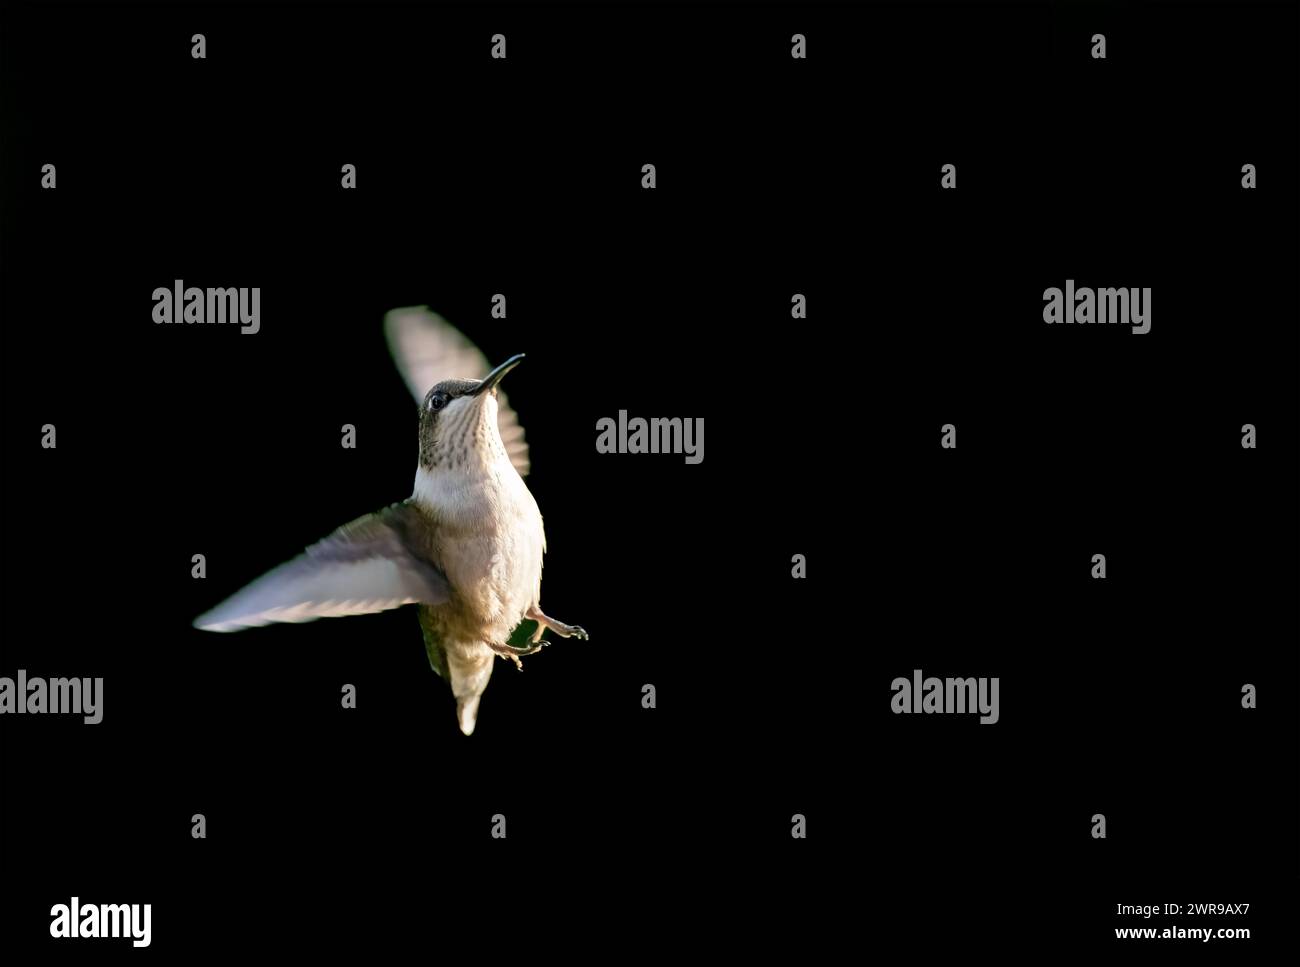 Sunlight illuminates hummingbird in flight agains dark, clean background Stock Photo